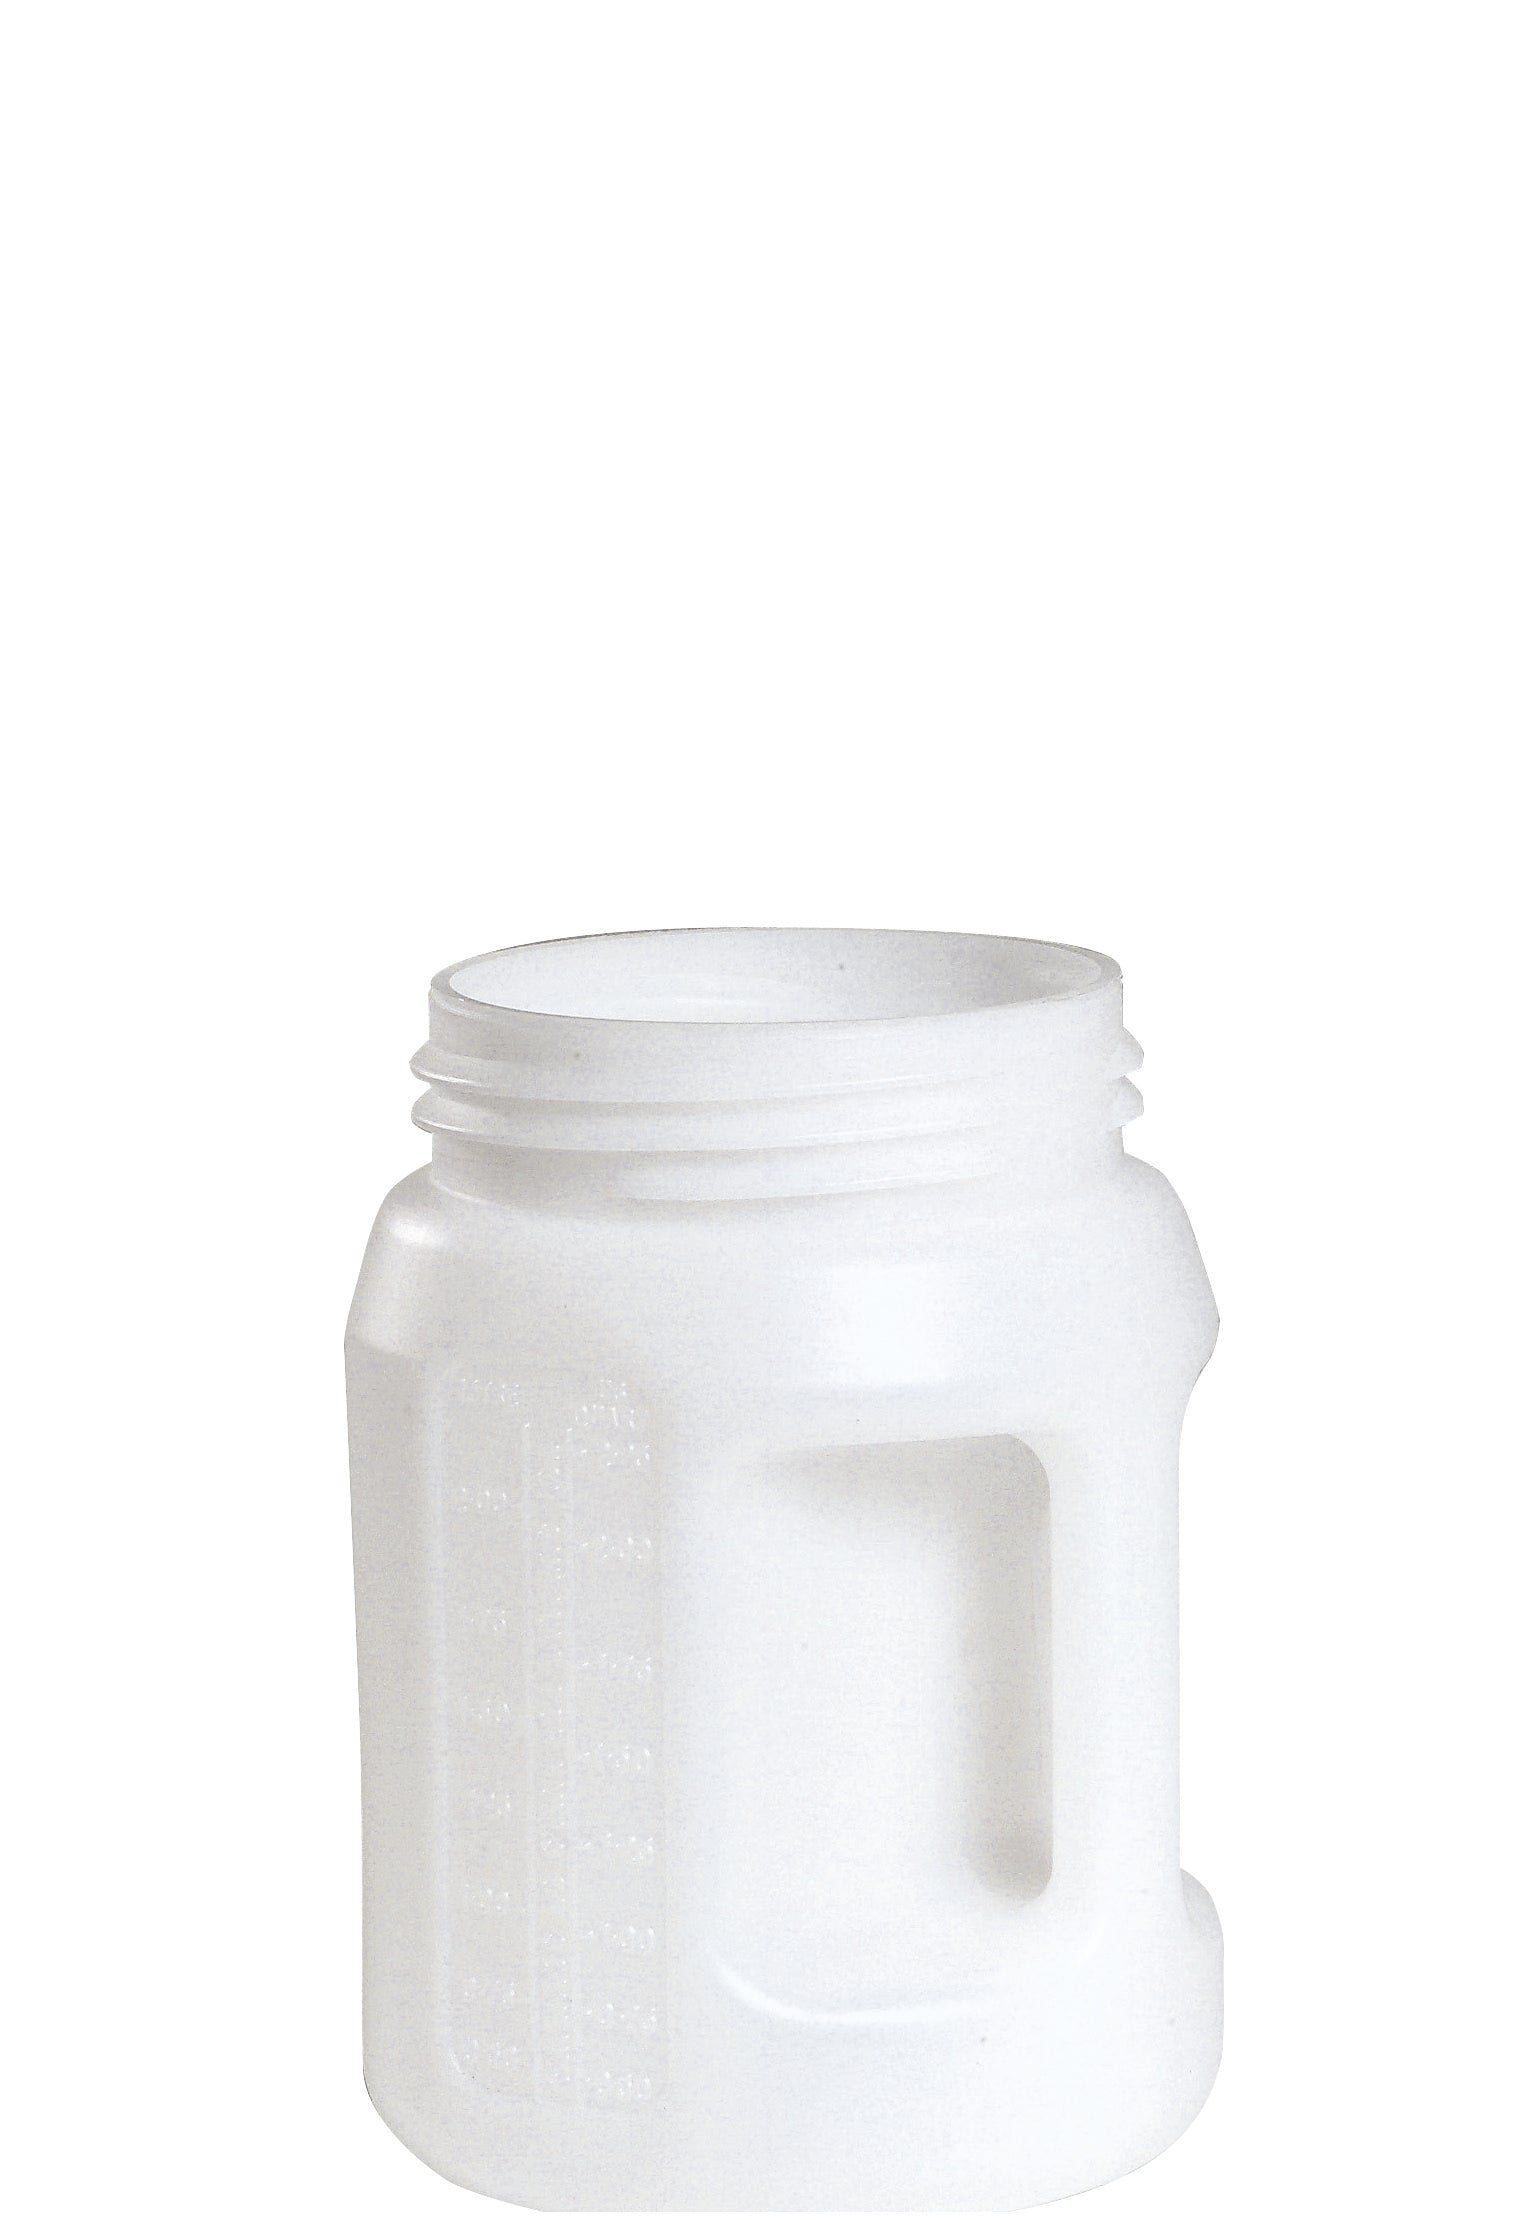 Oil can PE-HD white, 2 L 165 x 220 mm, polyethylen (high density)